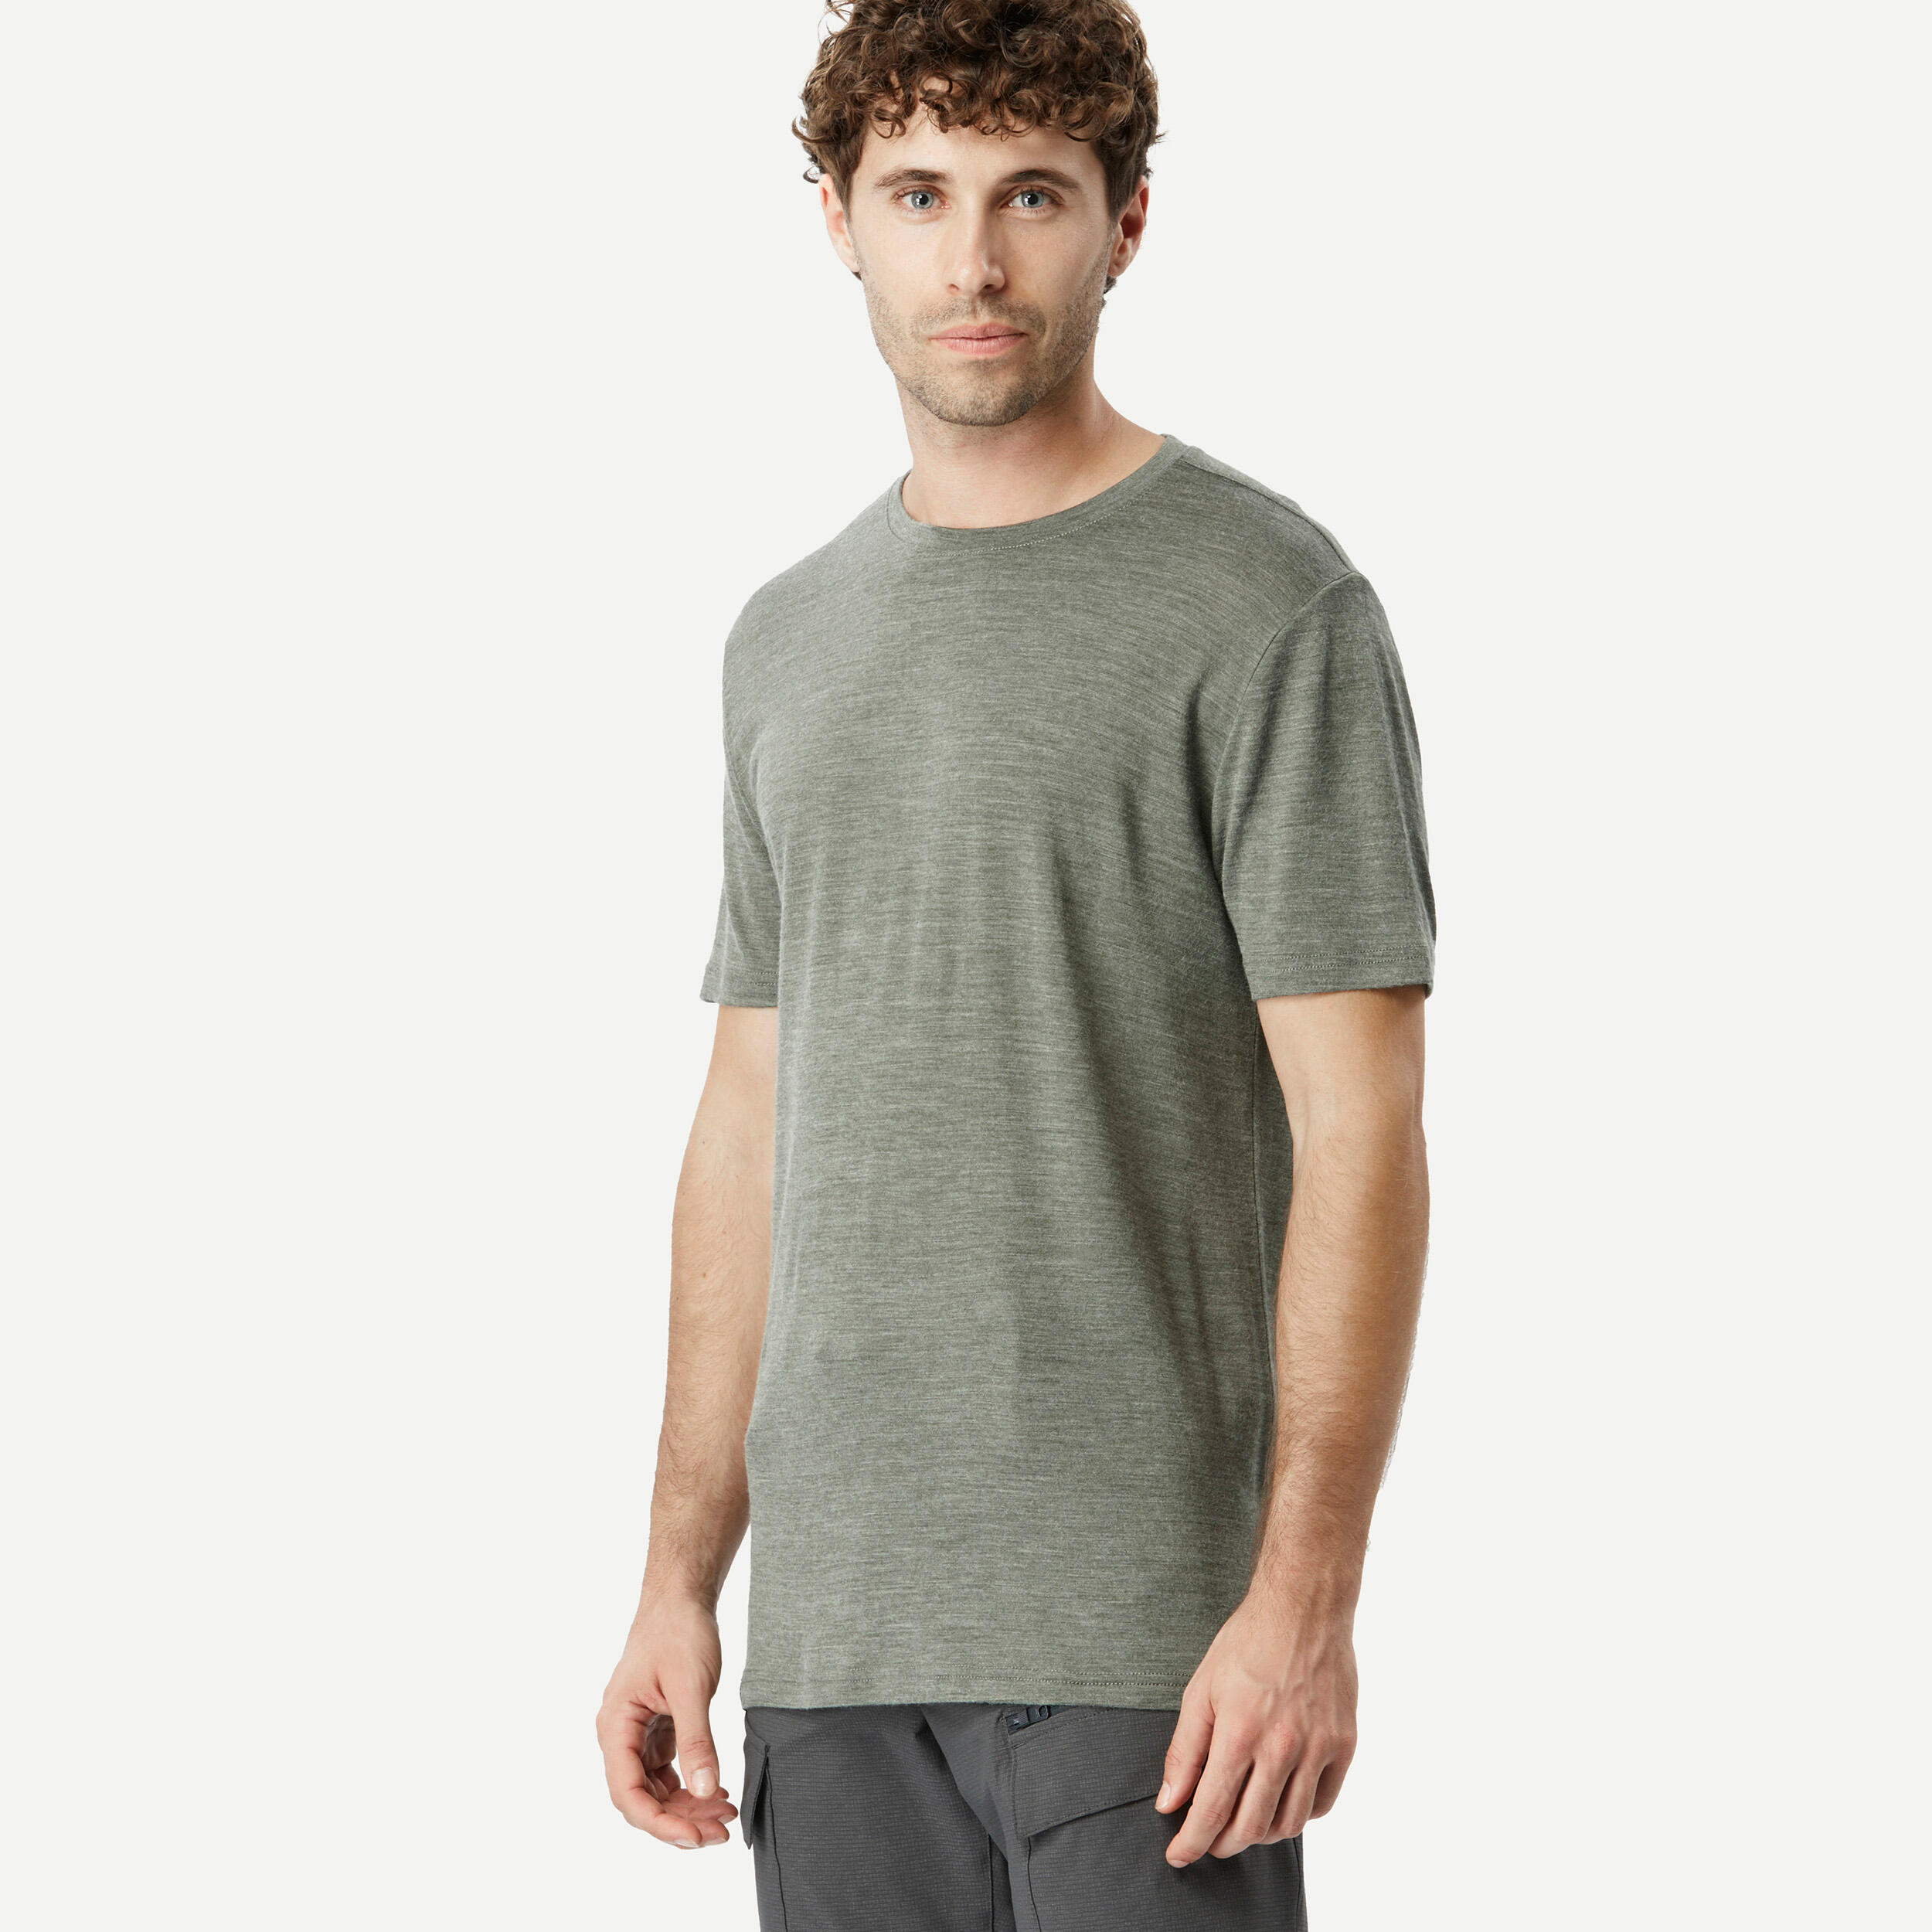 FORCLAZ Men’s short-sleeved Merino wool hiking travel t-shirt - TRAVEL 500 khaki